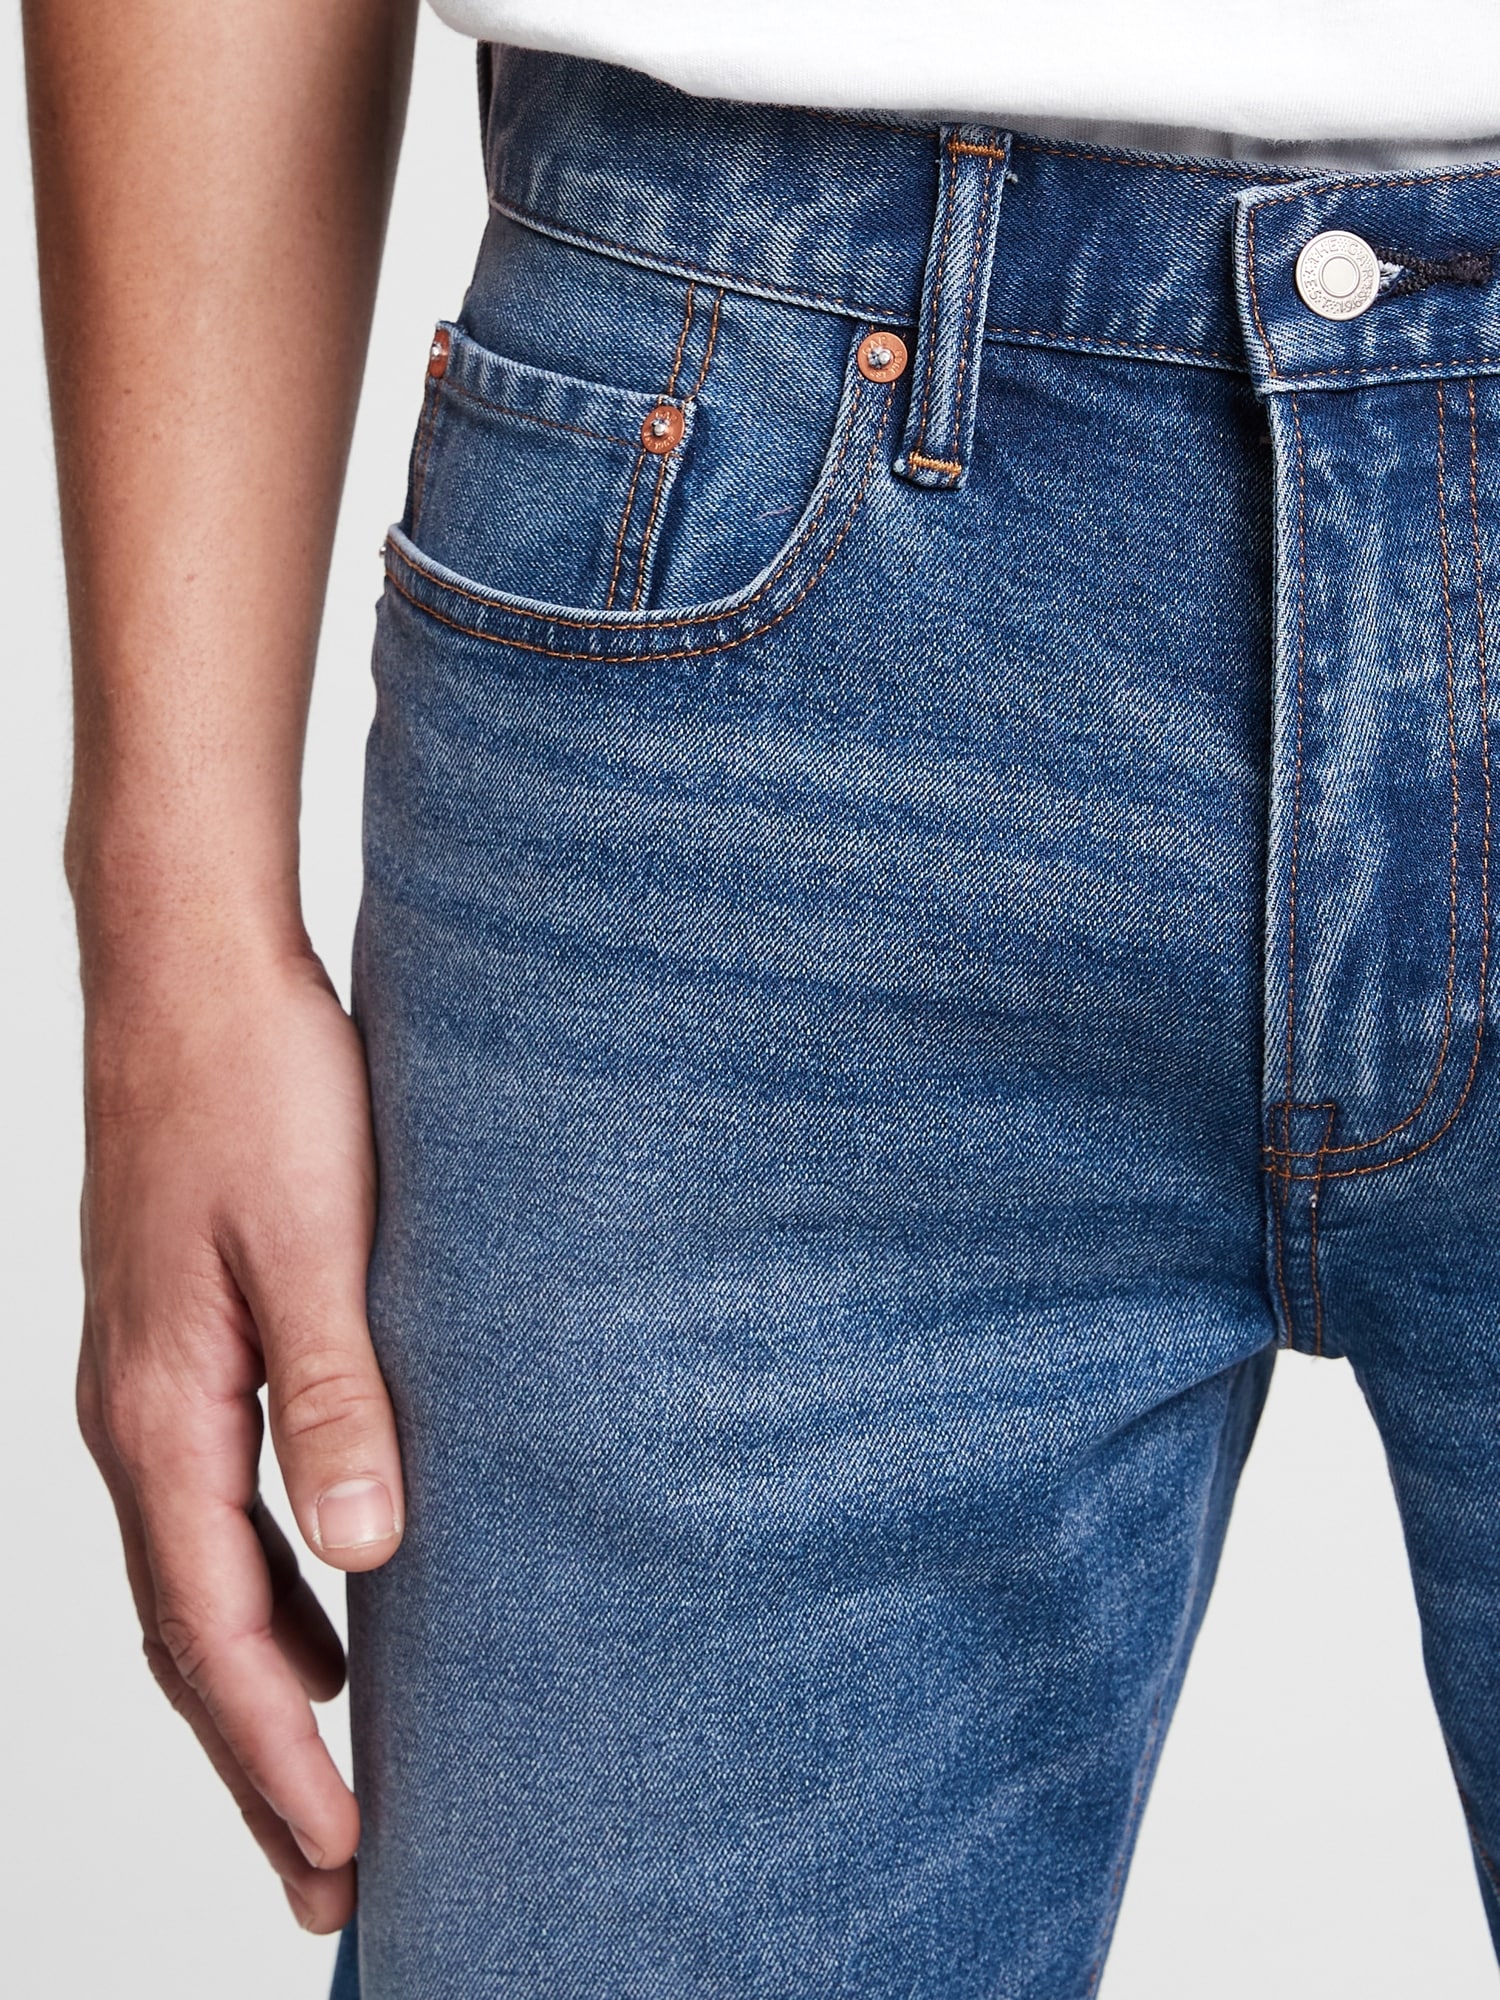 365Temp Performance Slim Jeans in GapFlex with Washwell | Gap